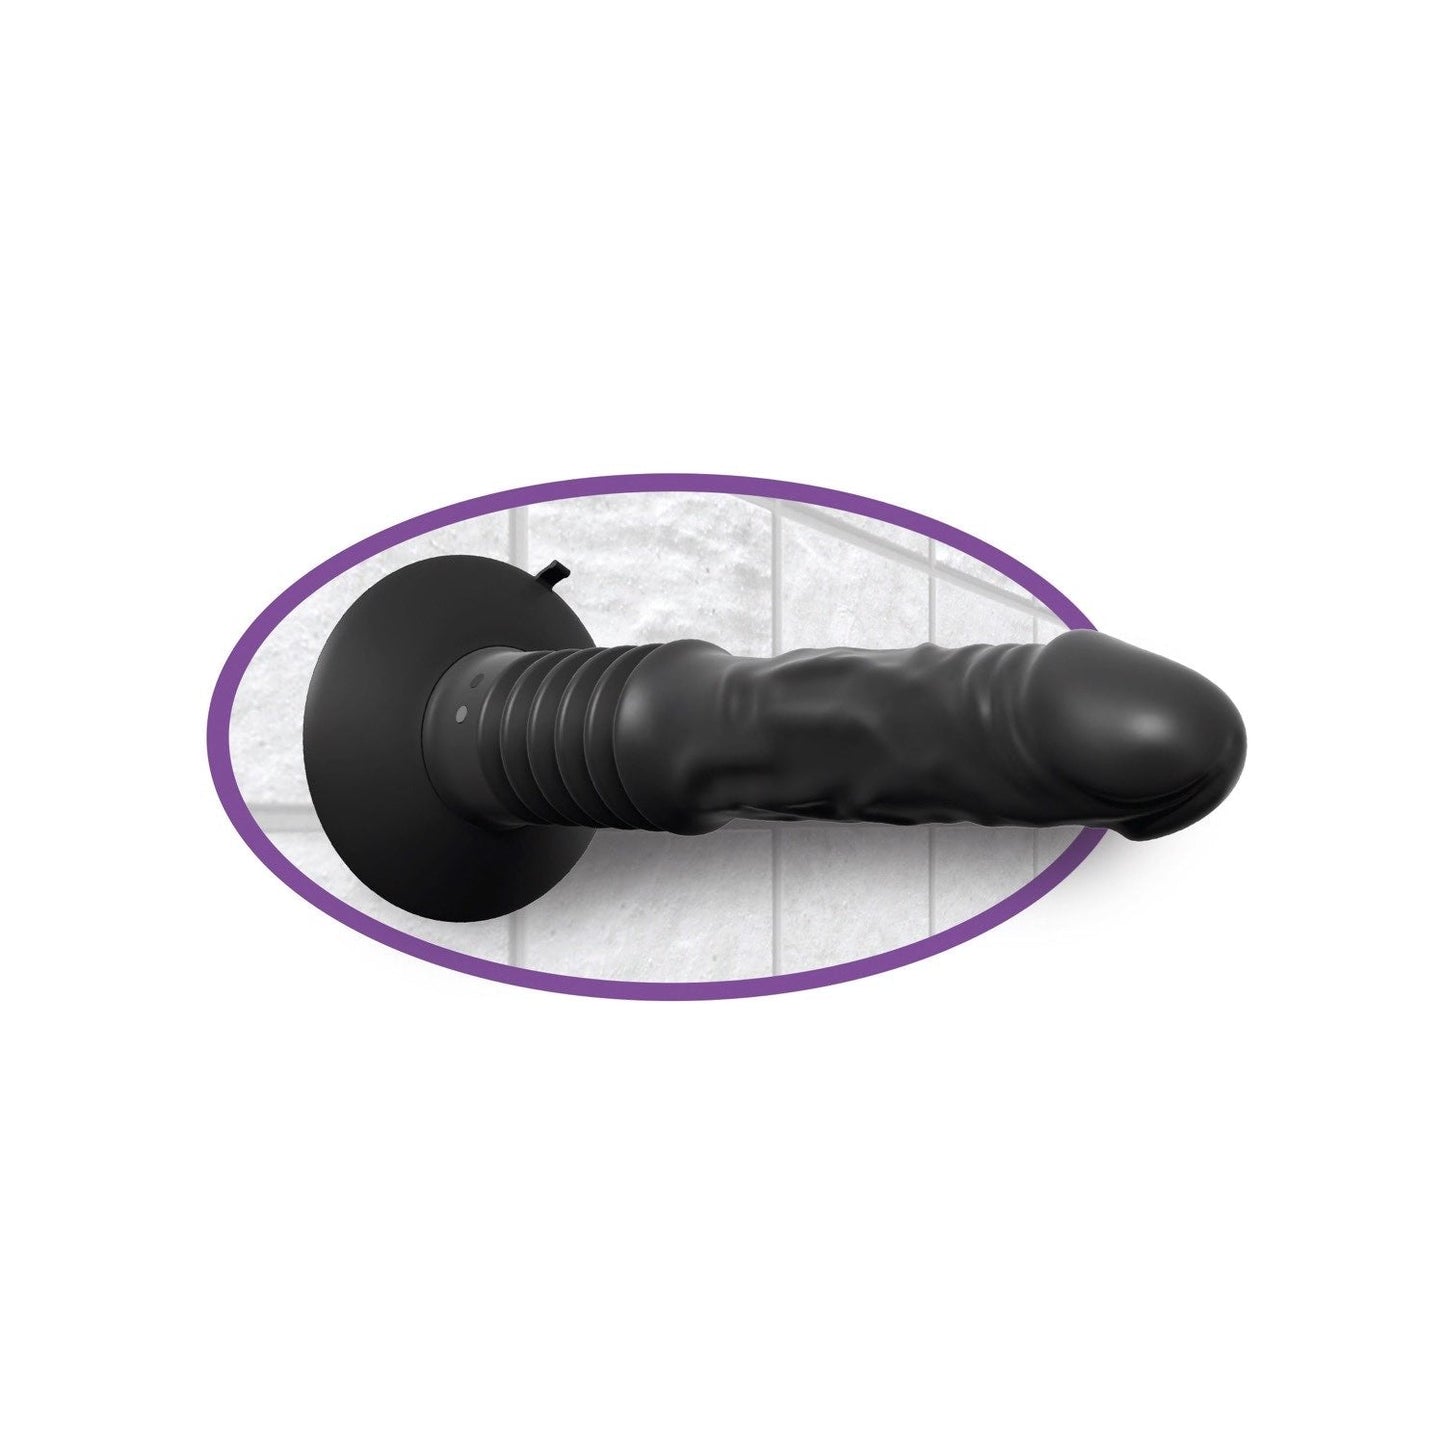 Vibrating Ass Fucker - Black 30.5 cm (12") USB Rechargeable Anal Vibrator